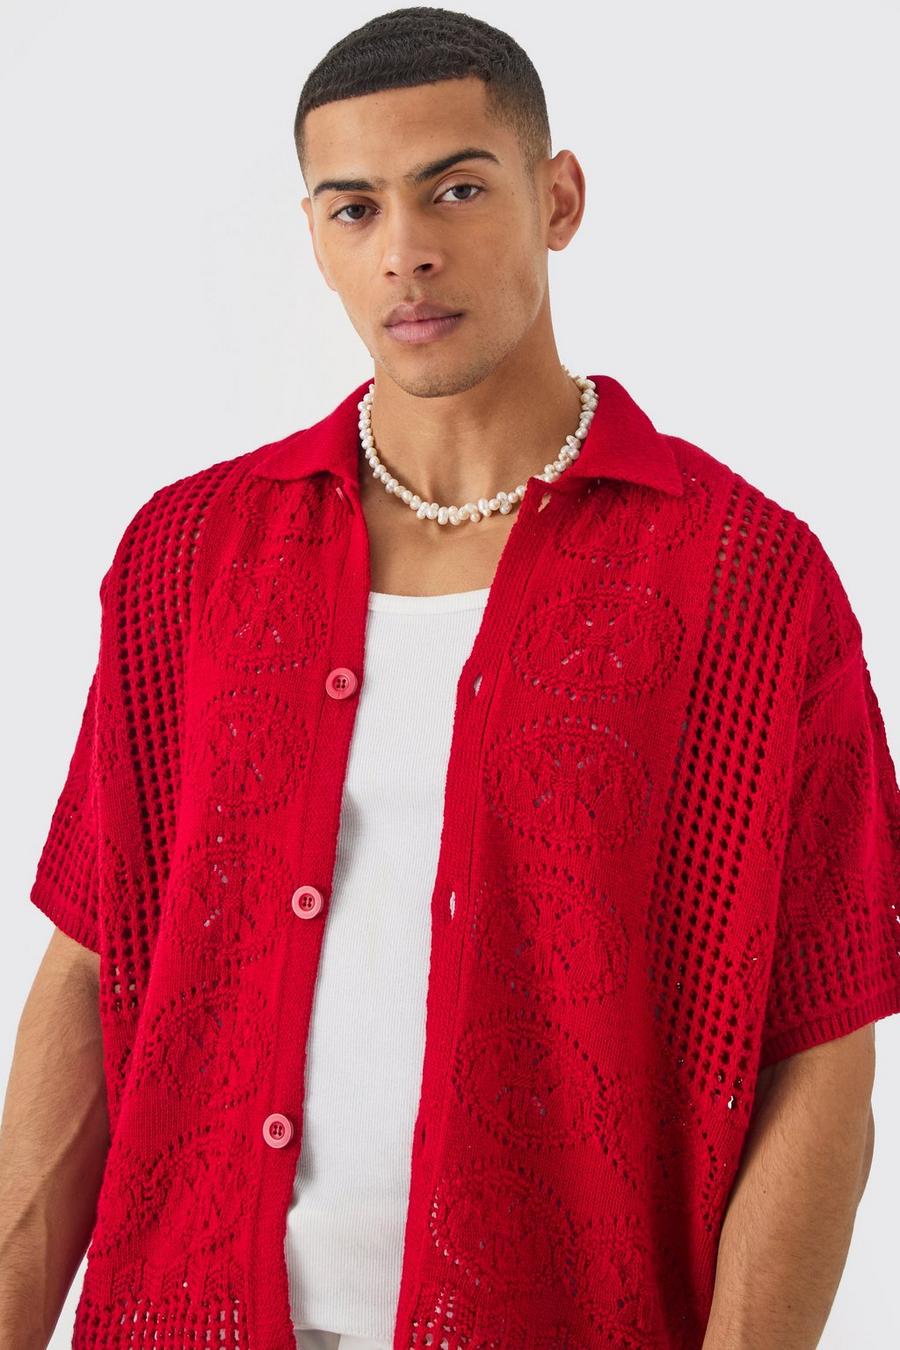 Kastiges Oversize Hemd in Rot mit Naht-Detail, Red